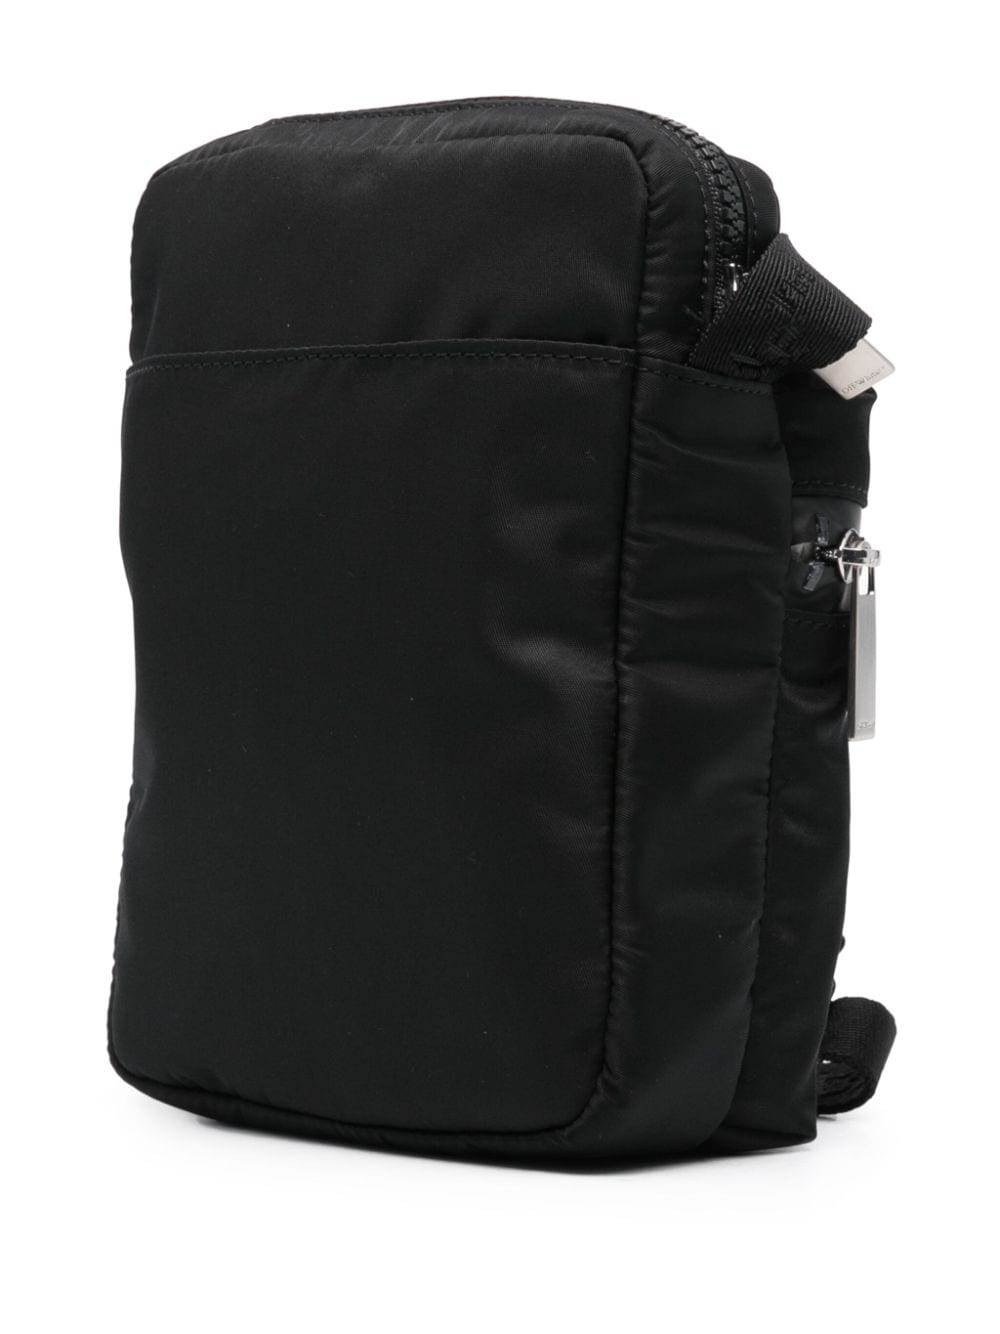 OFF-WHITE Black Nylon Crossbody Handbag with Contrasting Lettering Logo